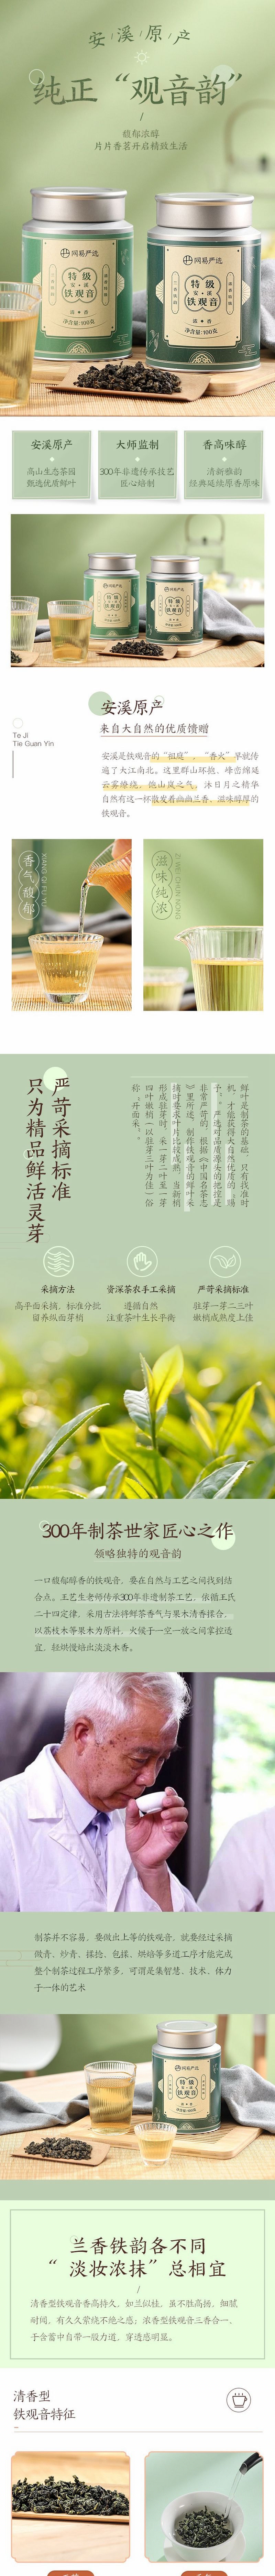 YANXUAN Anxi Tieguanyin Tea 100g - Enriched Flavour